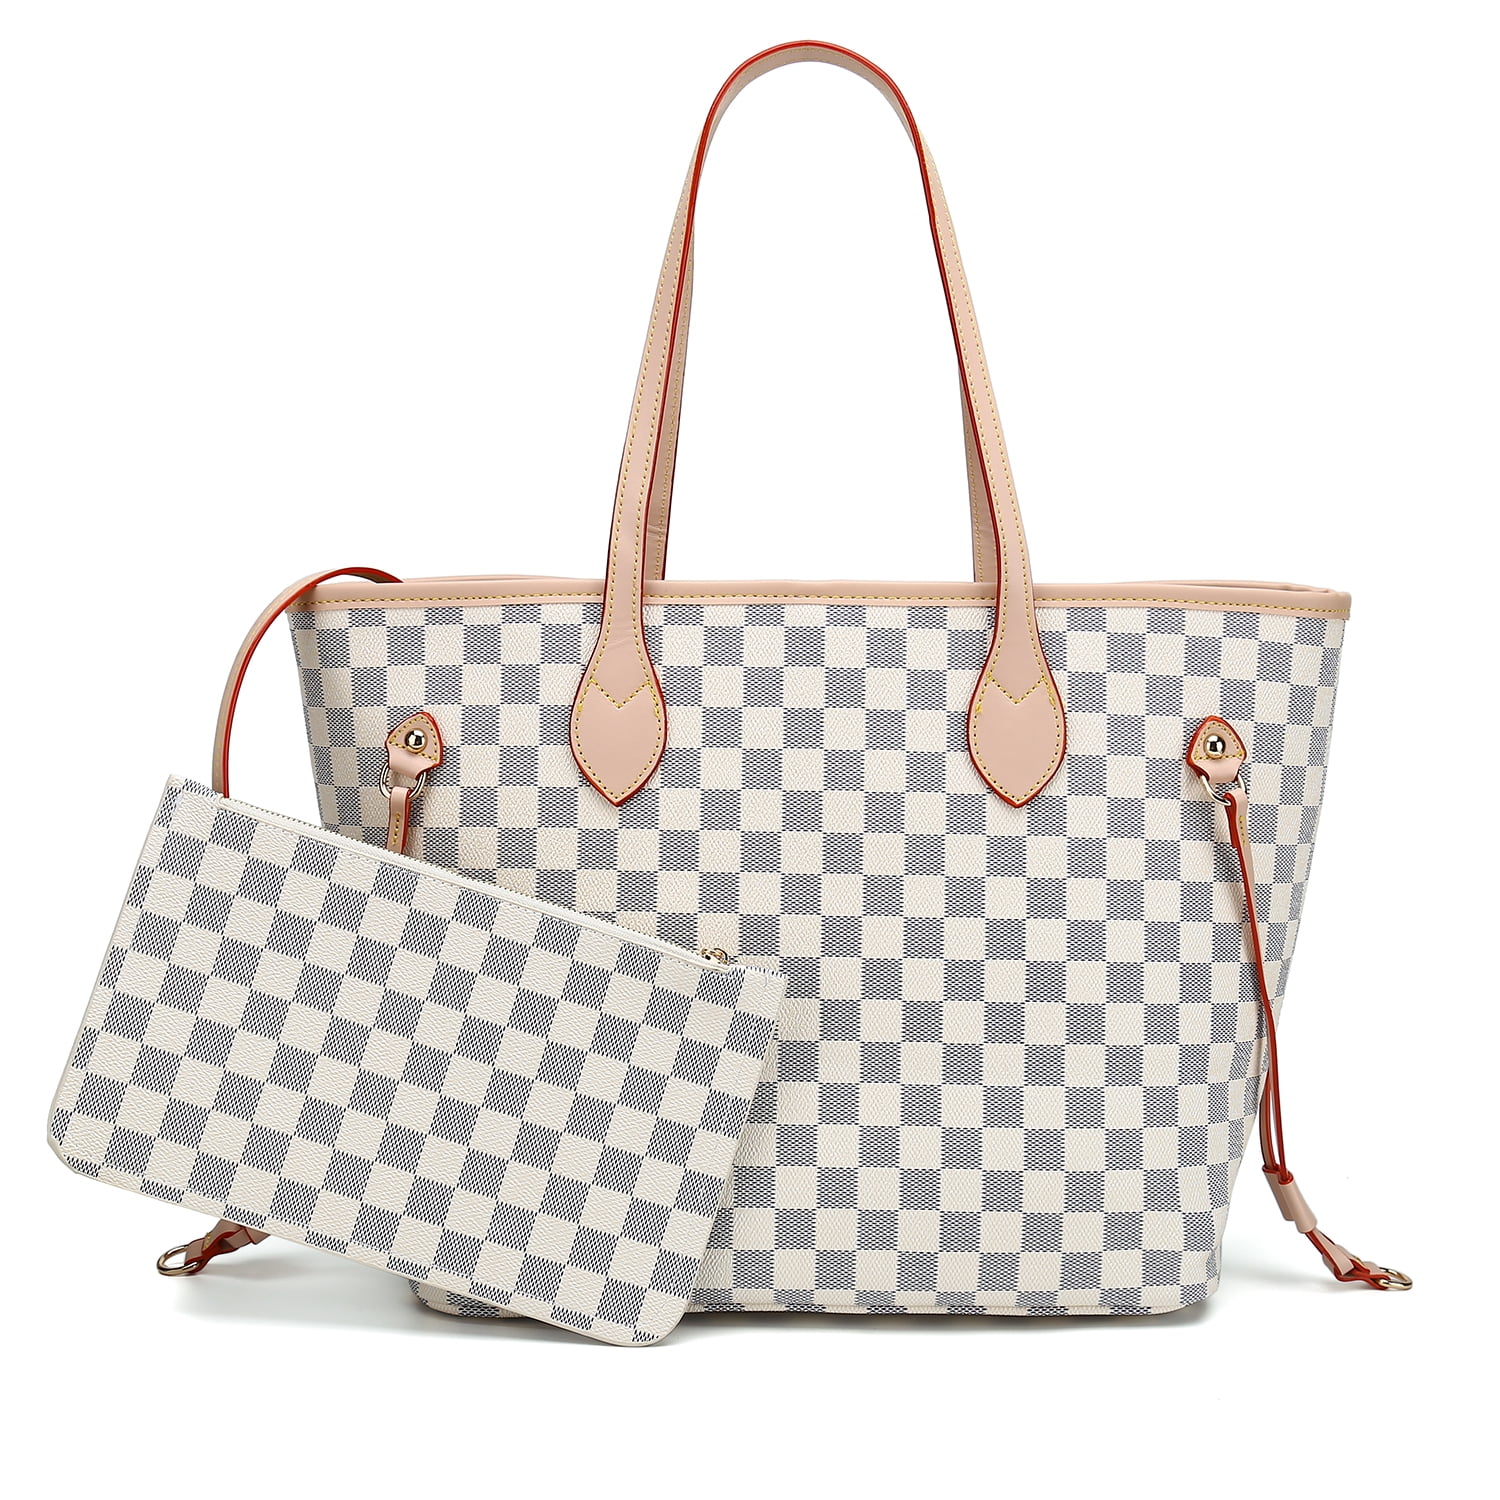 Retro Leather Women Shoulder Bag Animal Pattern Totes Travel Daily Handbags NEW 